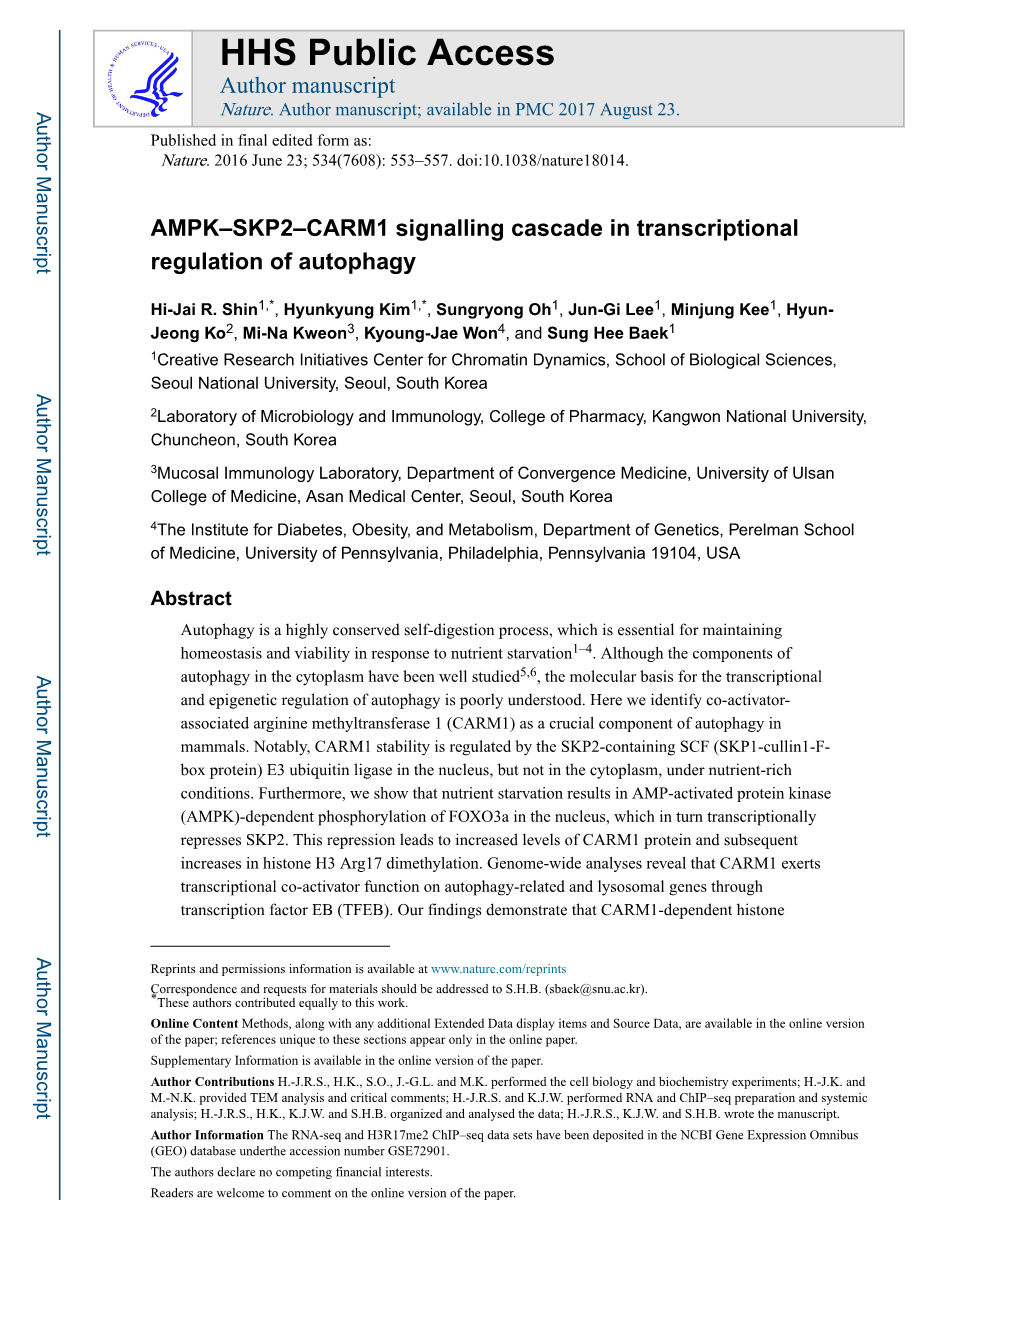 AMPK–SKP2–CARM1 Signalling Cascade in Transcriptional Regulation of Autophagy